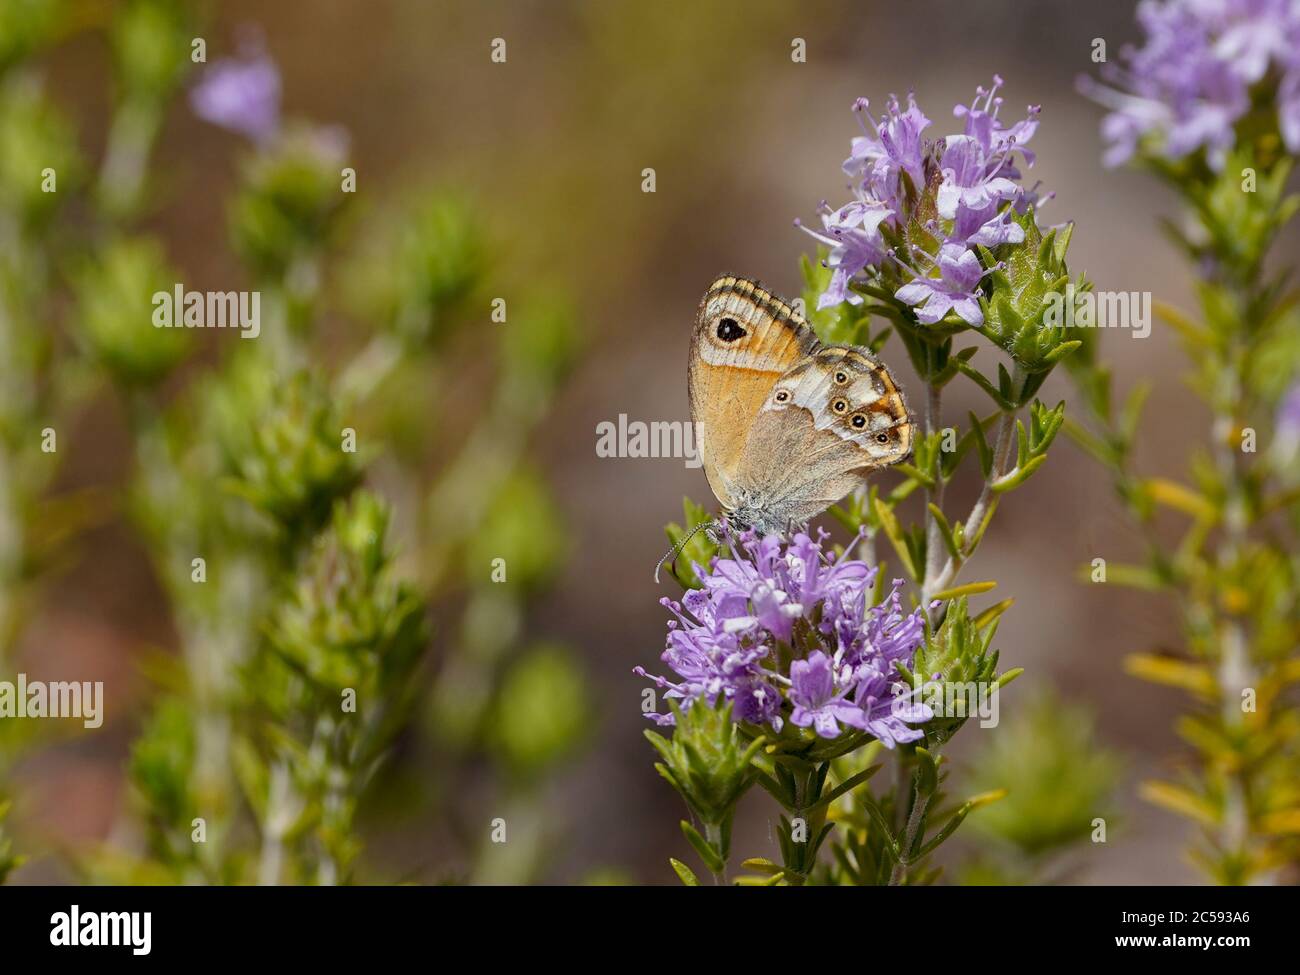 Dusky heath butterfly, Coenonympha dorus, feeding on wild thyme, Andalusia, Spain. Stock Photo